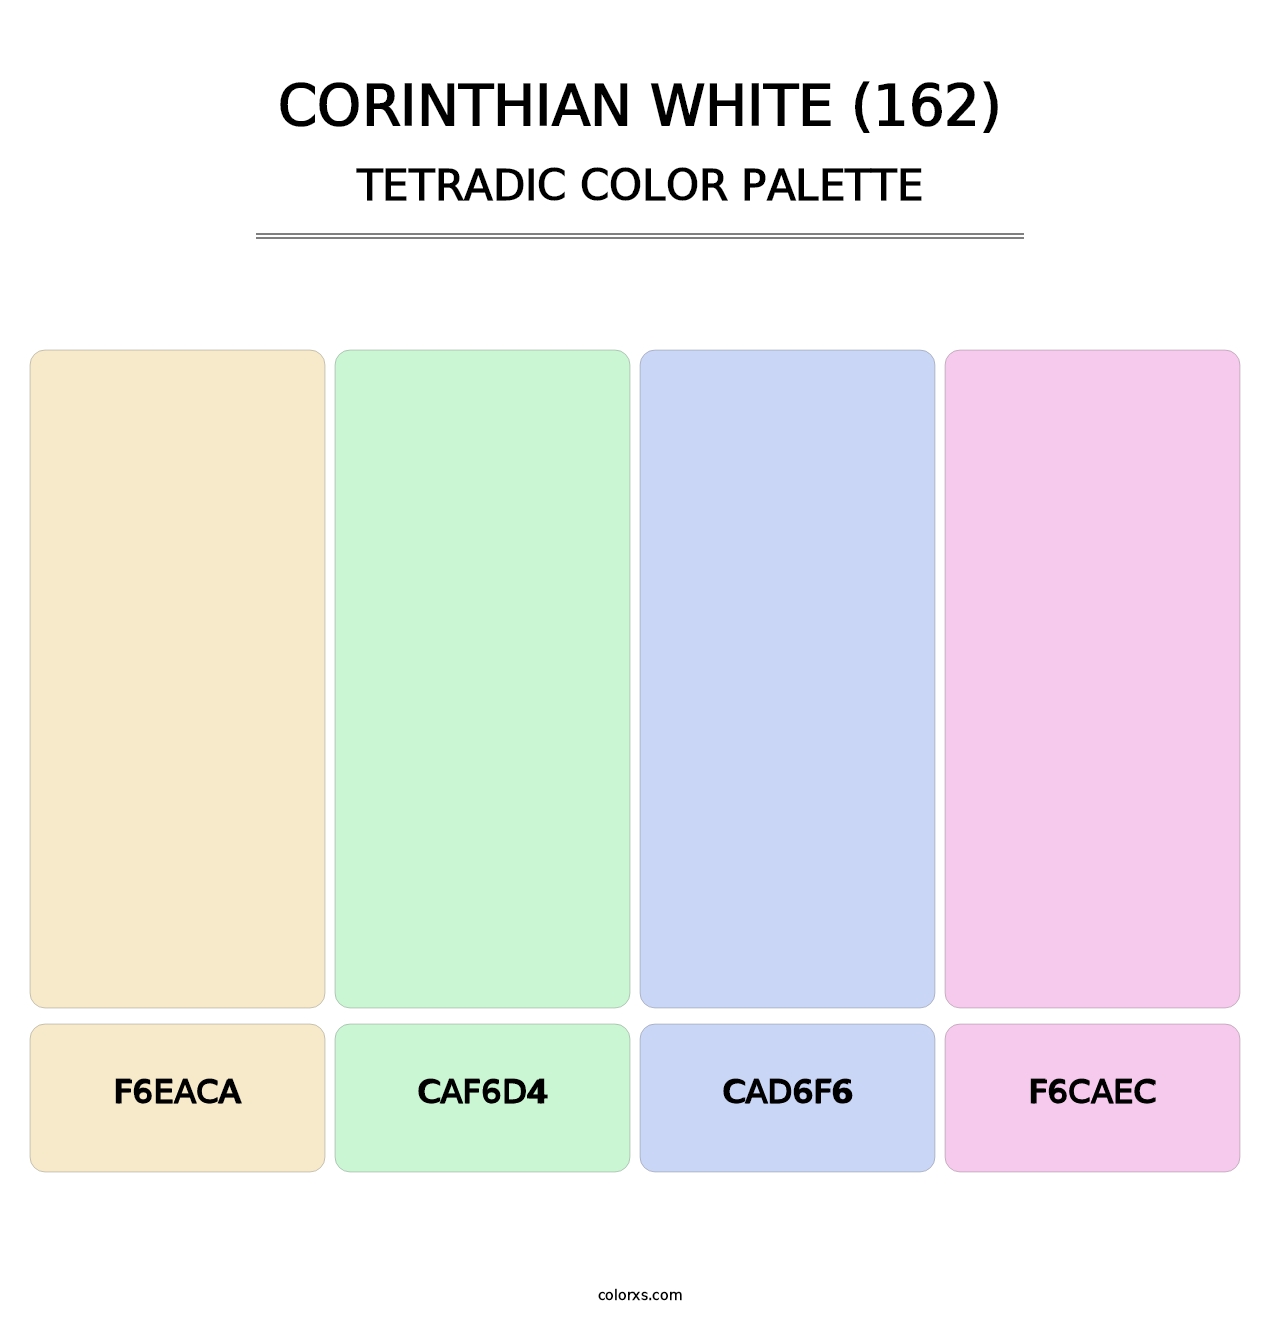 Corinthian White (162) - Tetradic Color Palette